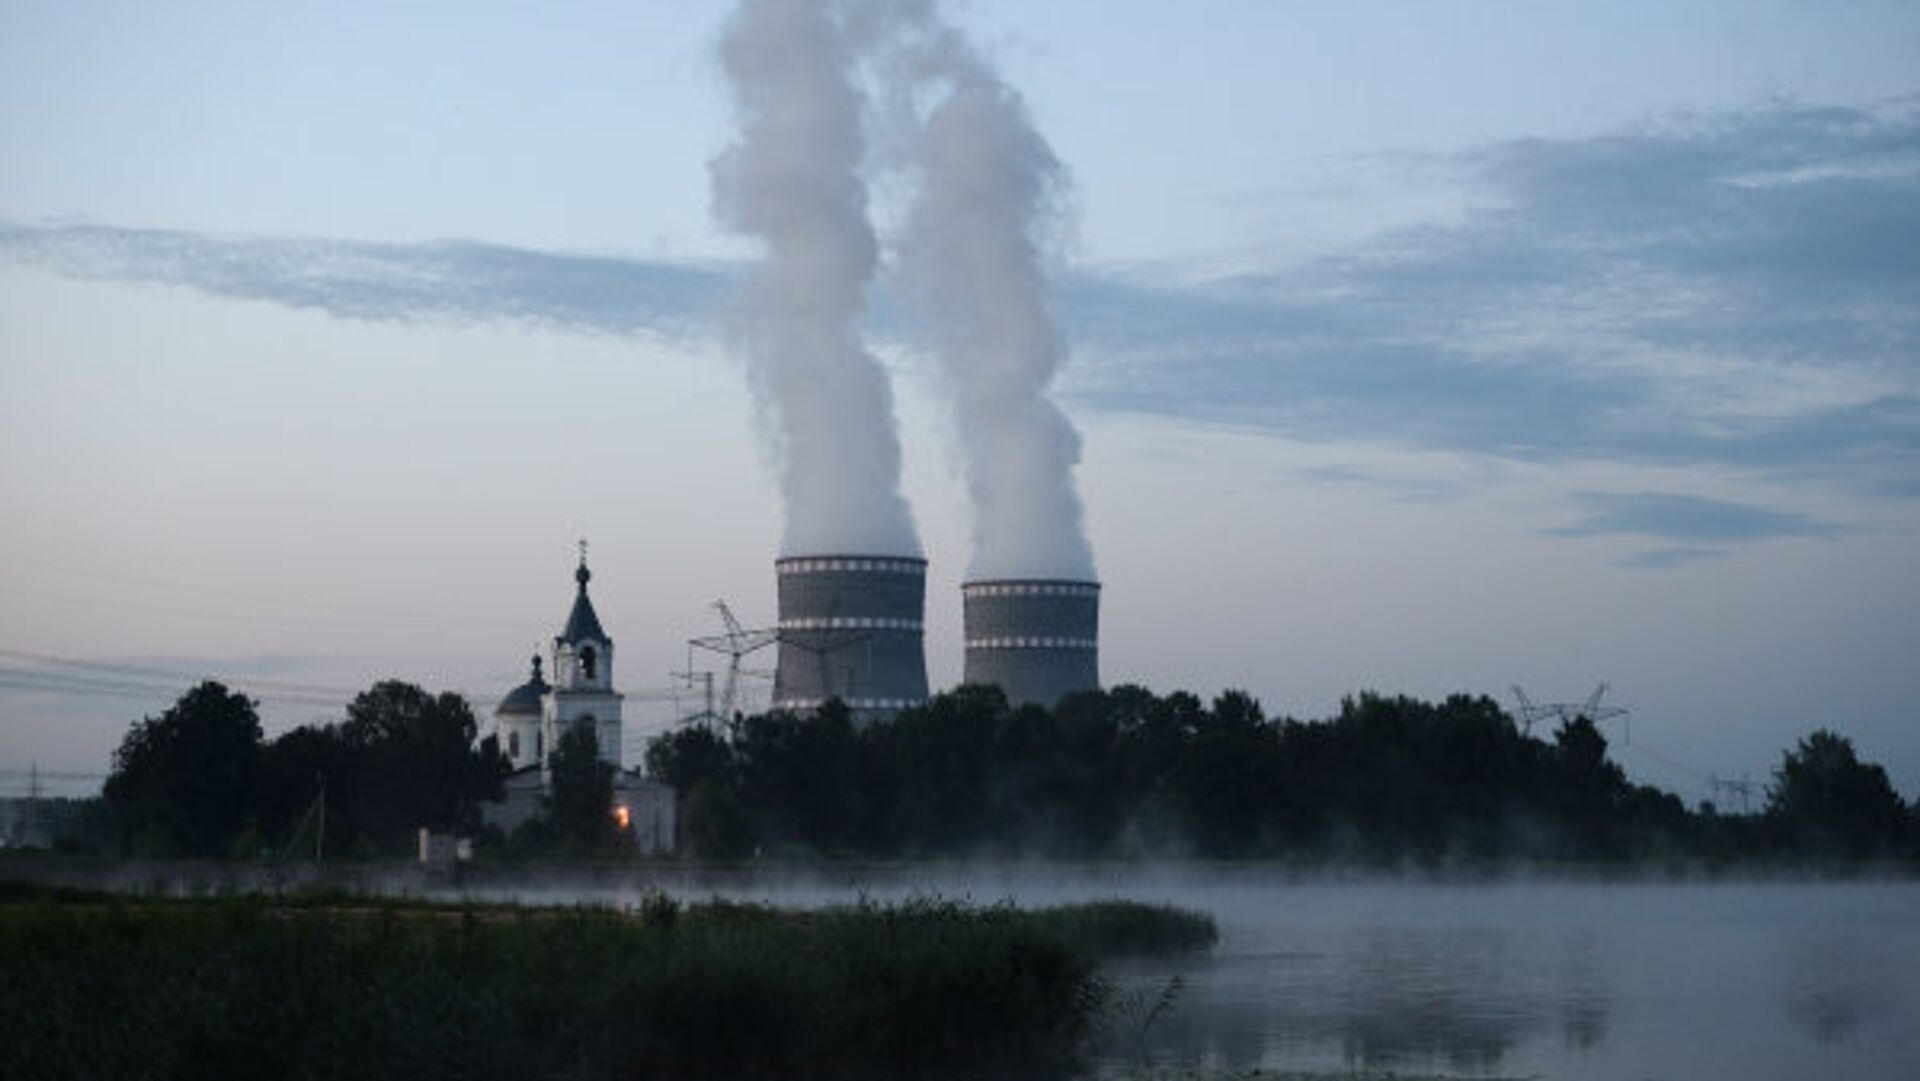 The Kalininskaya Nuclear Power Plant, located near the town of Udomlya in Russia - Sputnik International, 1920, 11.10.2021